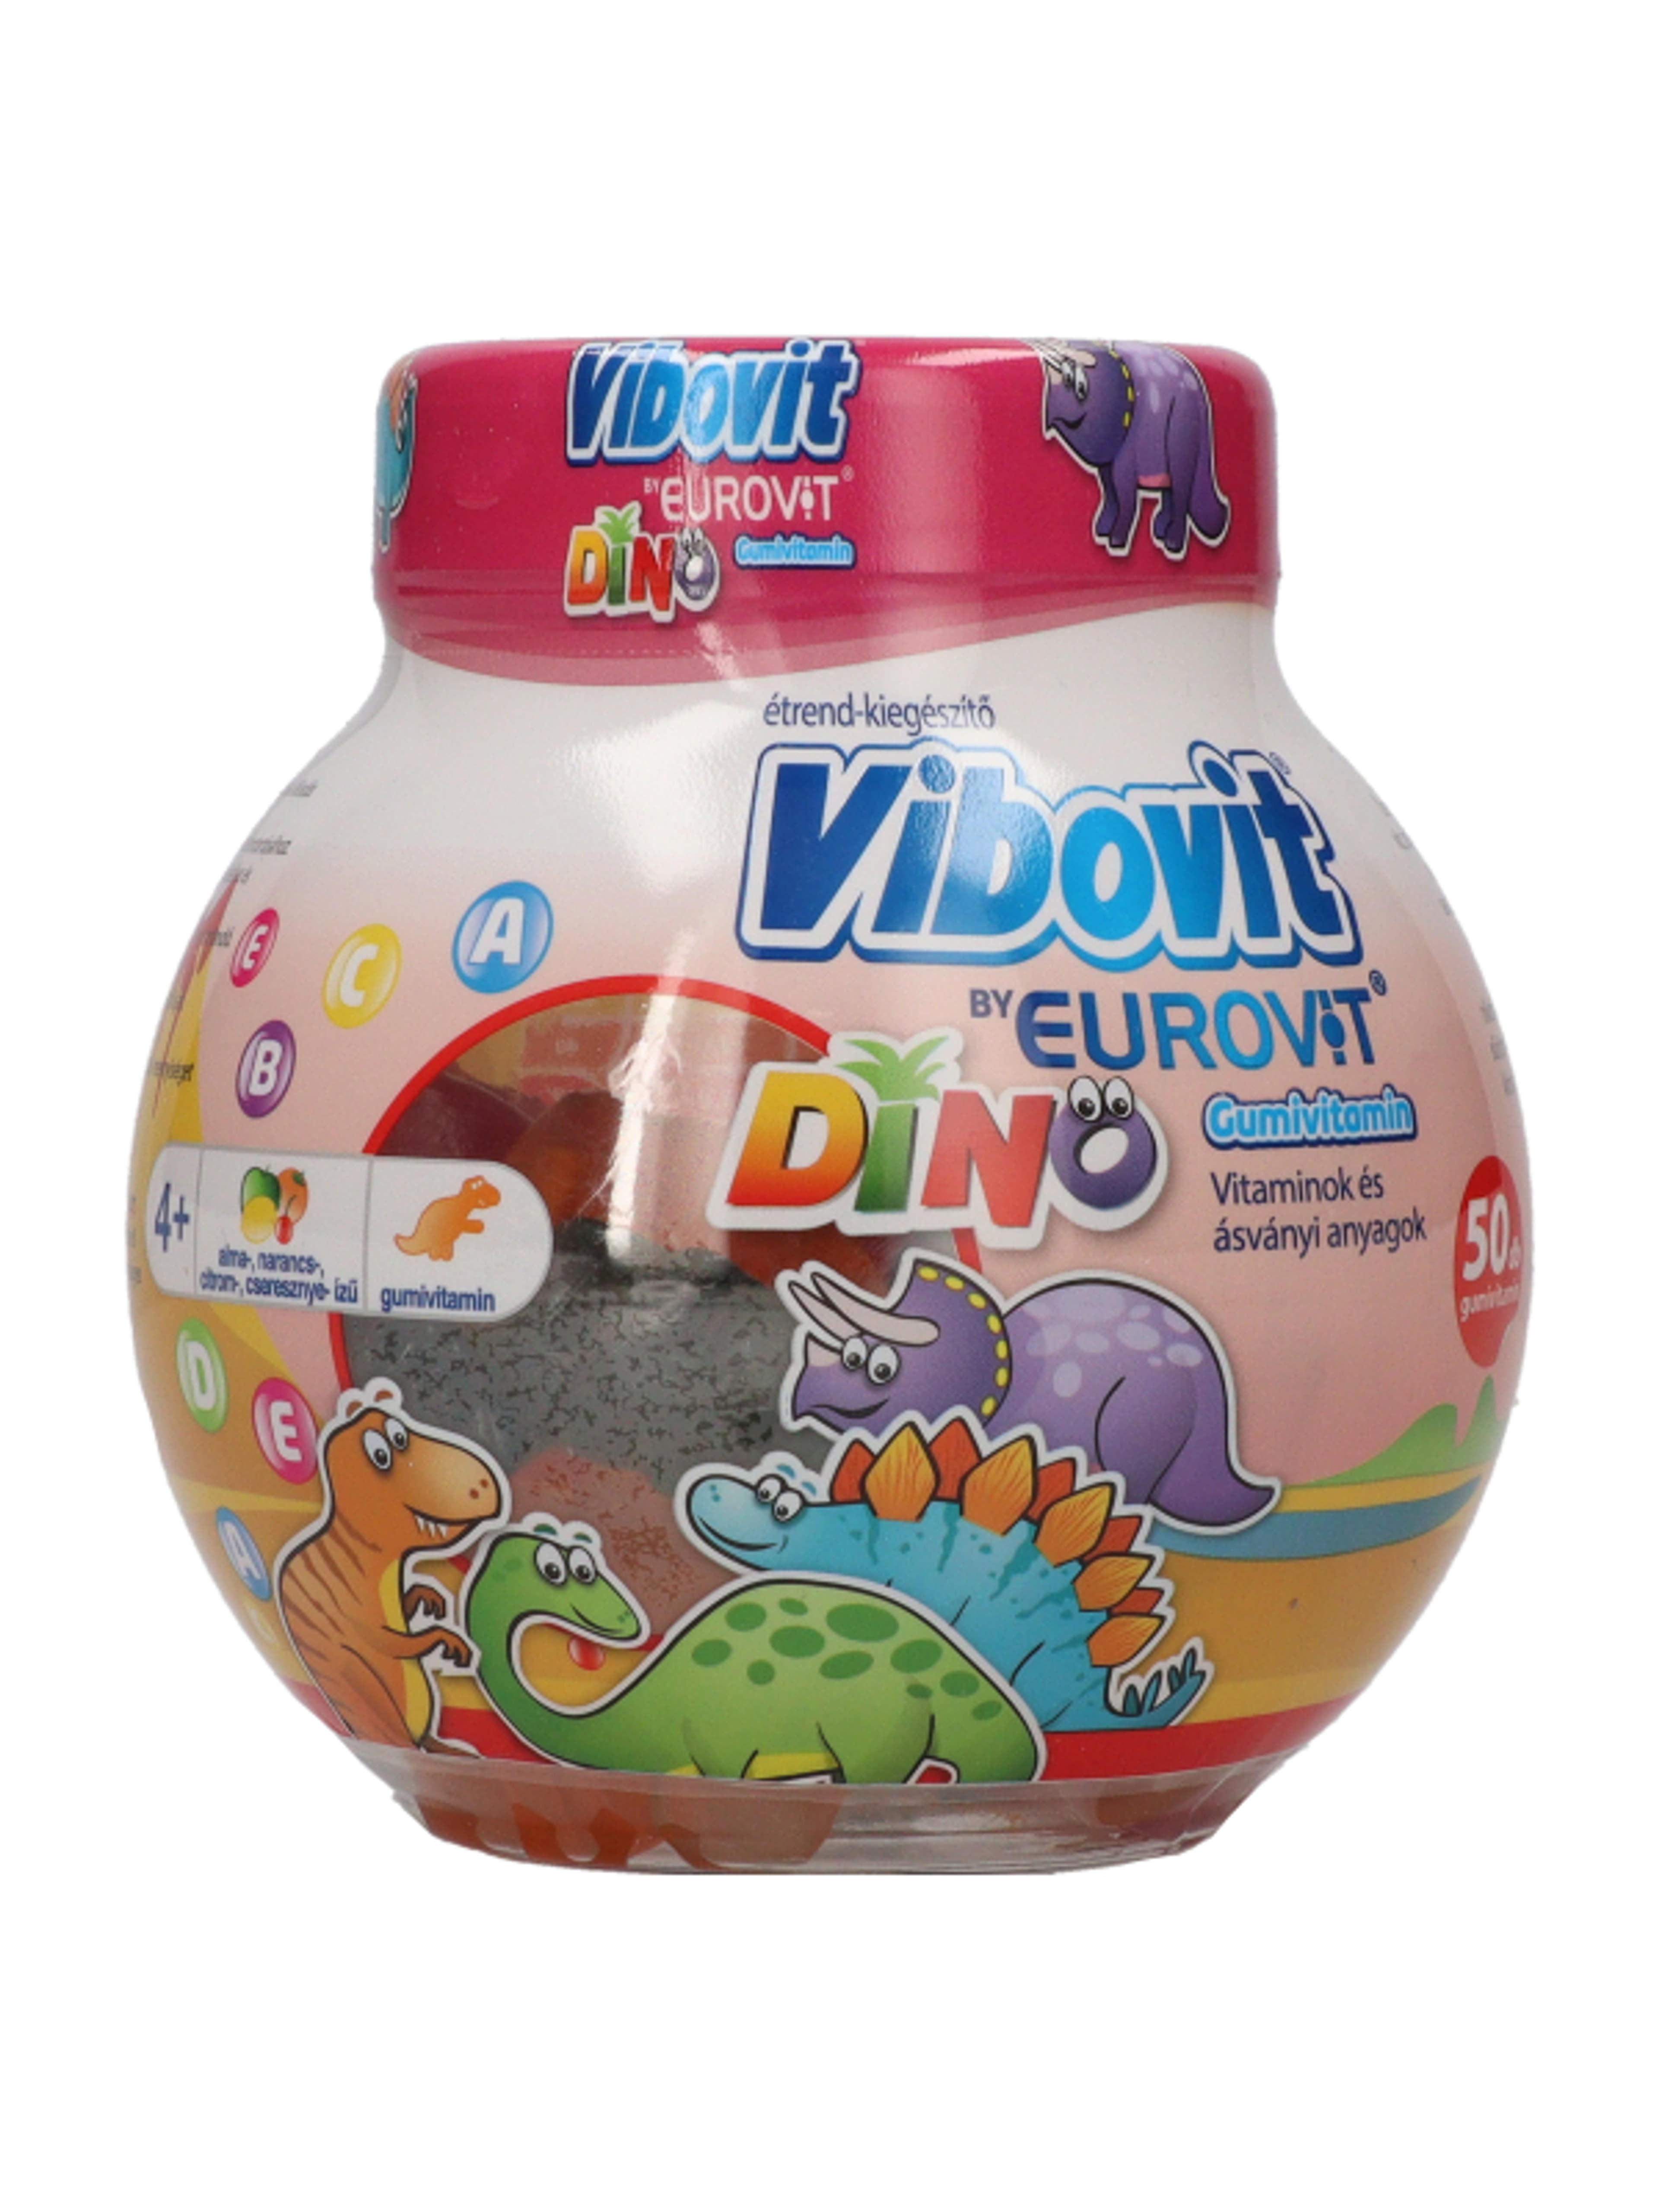 Vibovit BY EUROVIT Dino Gyümölcsös Ízű Gumivitamin - 50 db-2